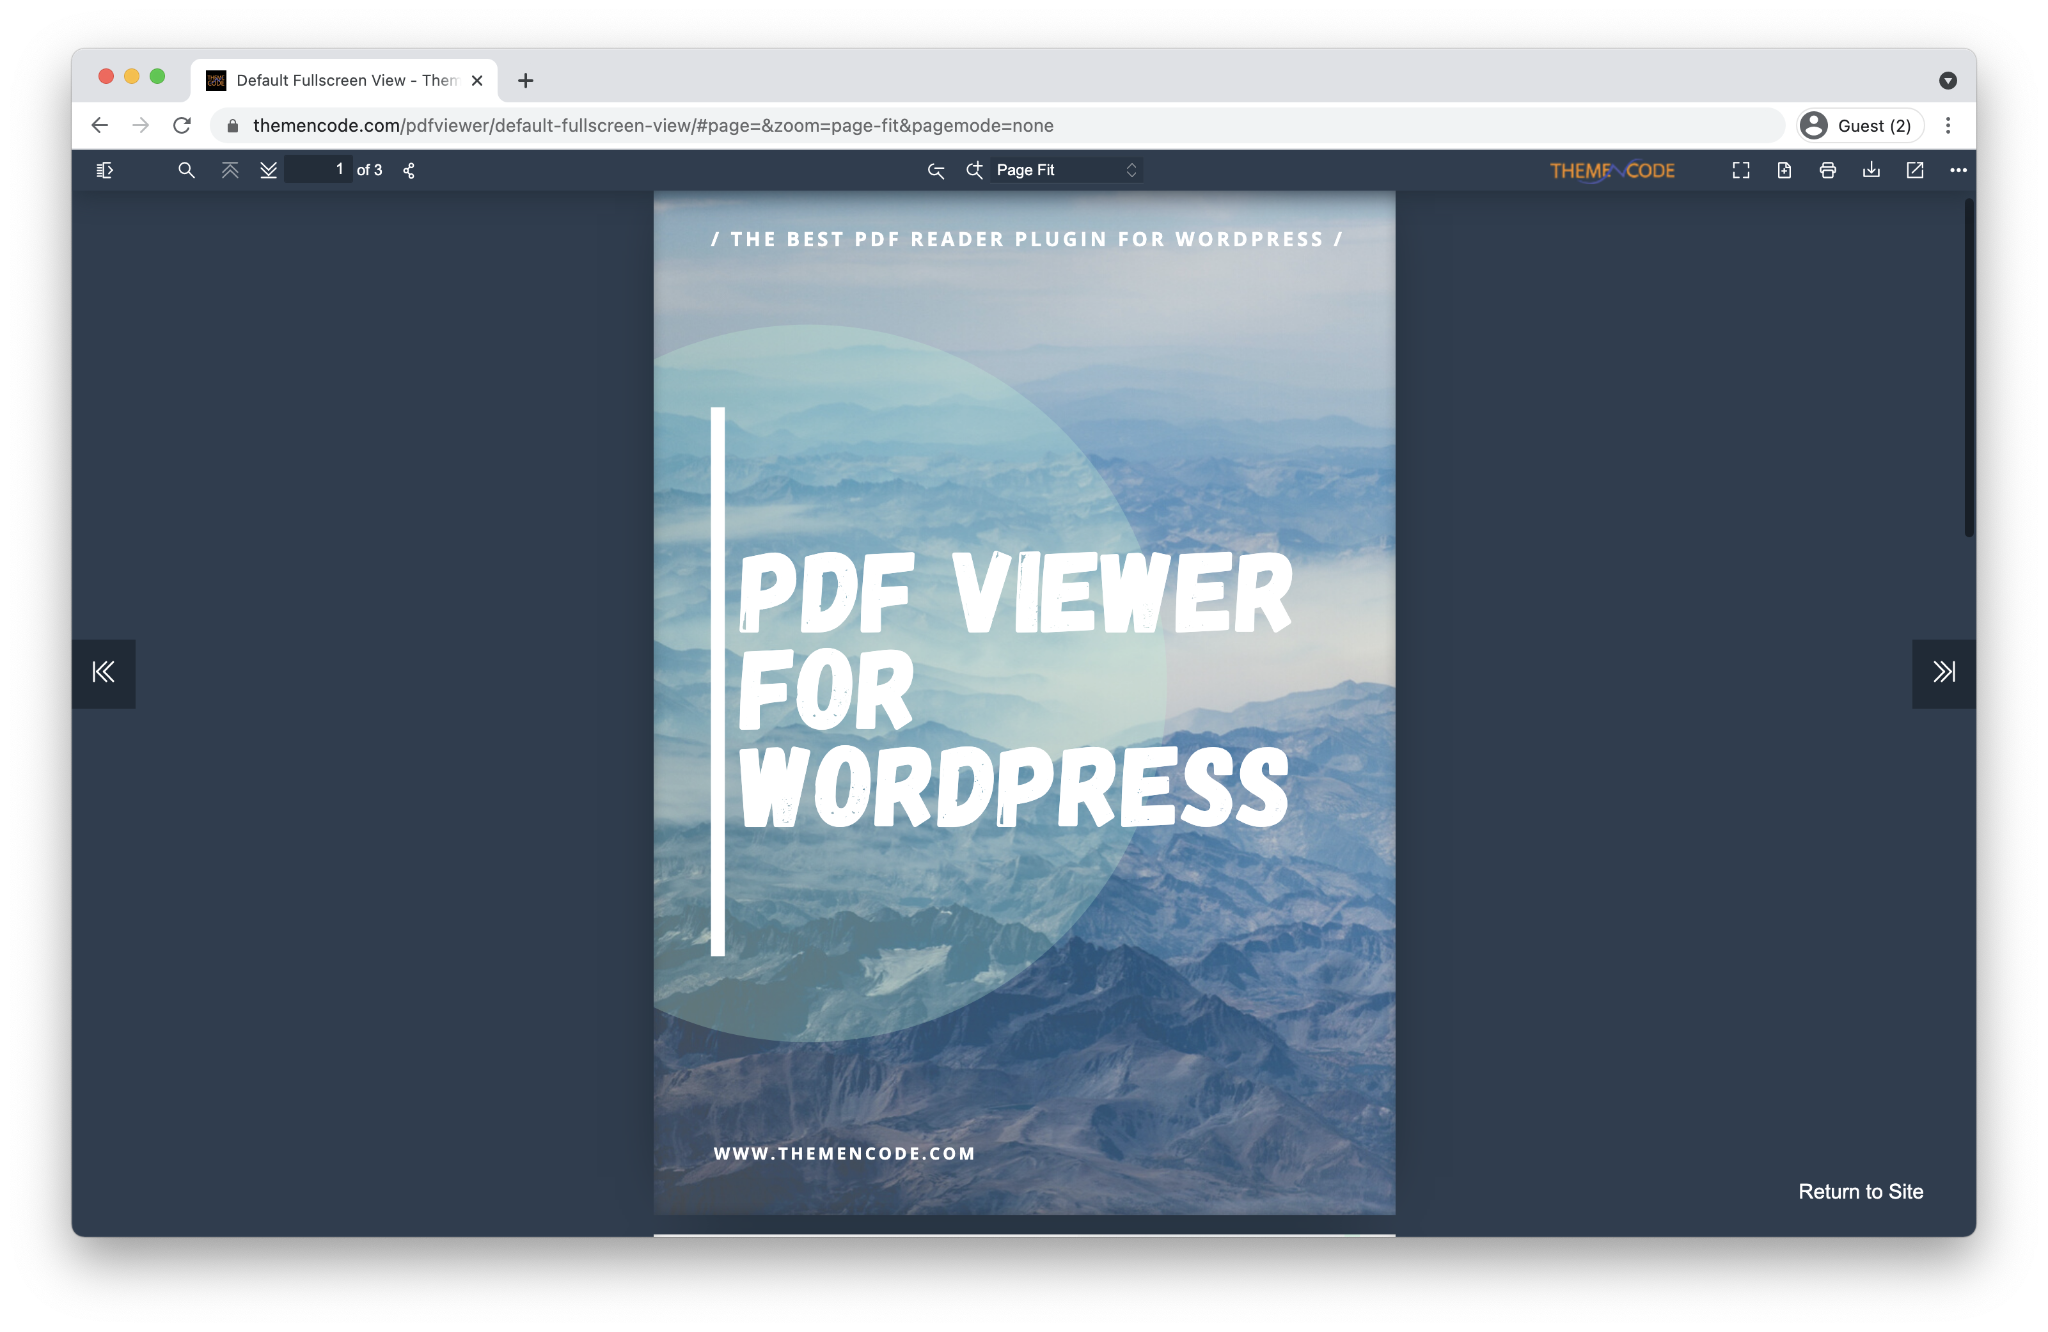 PDF Viewer for WordPress